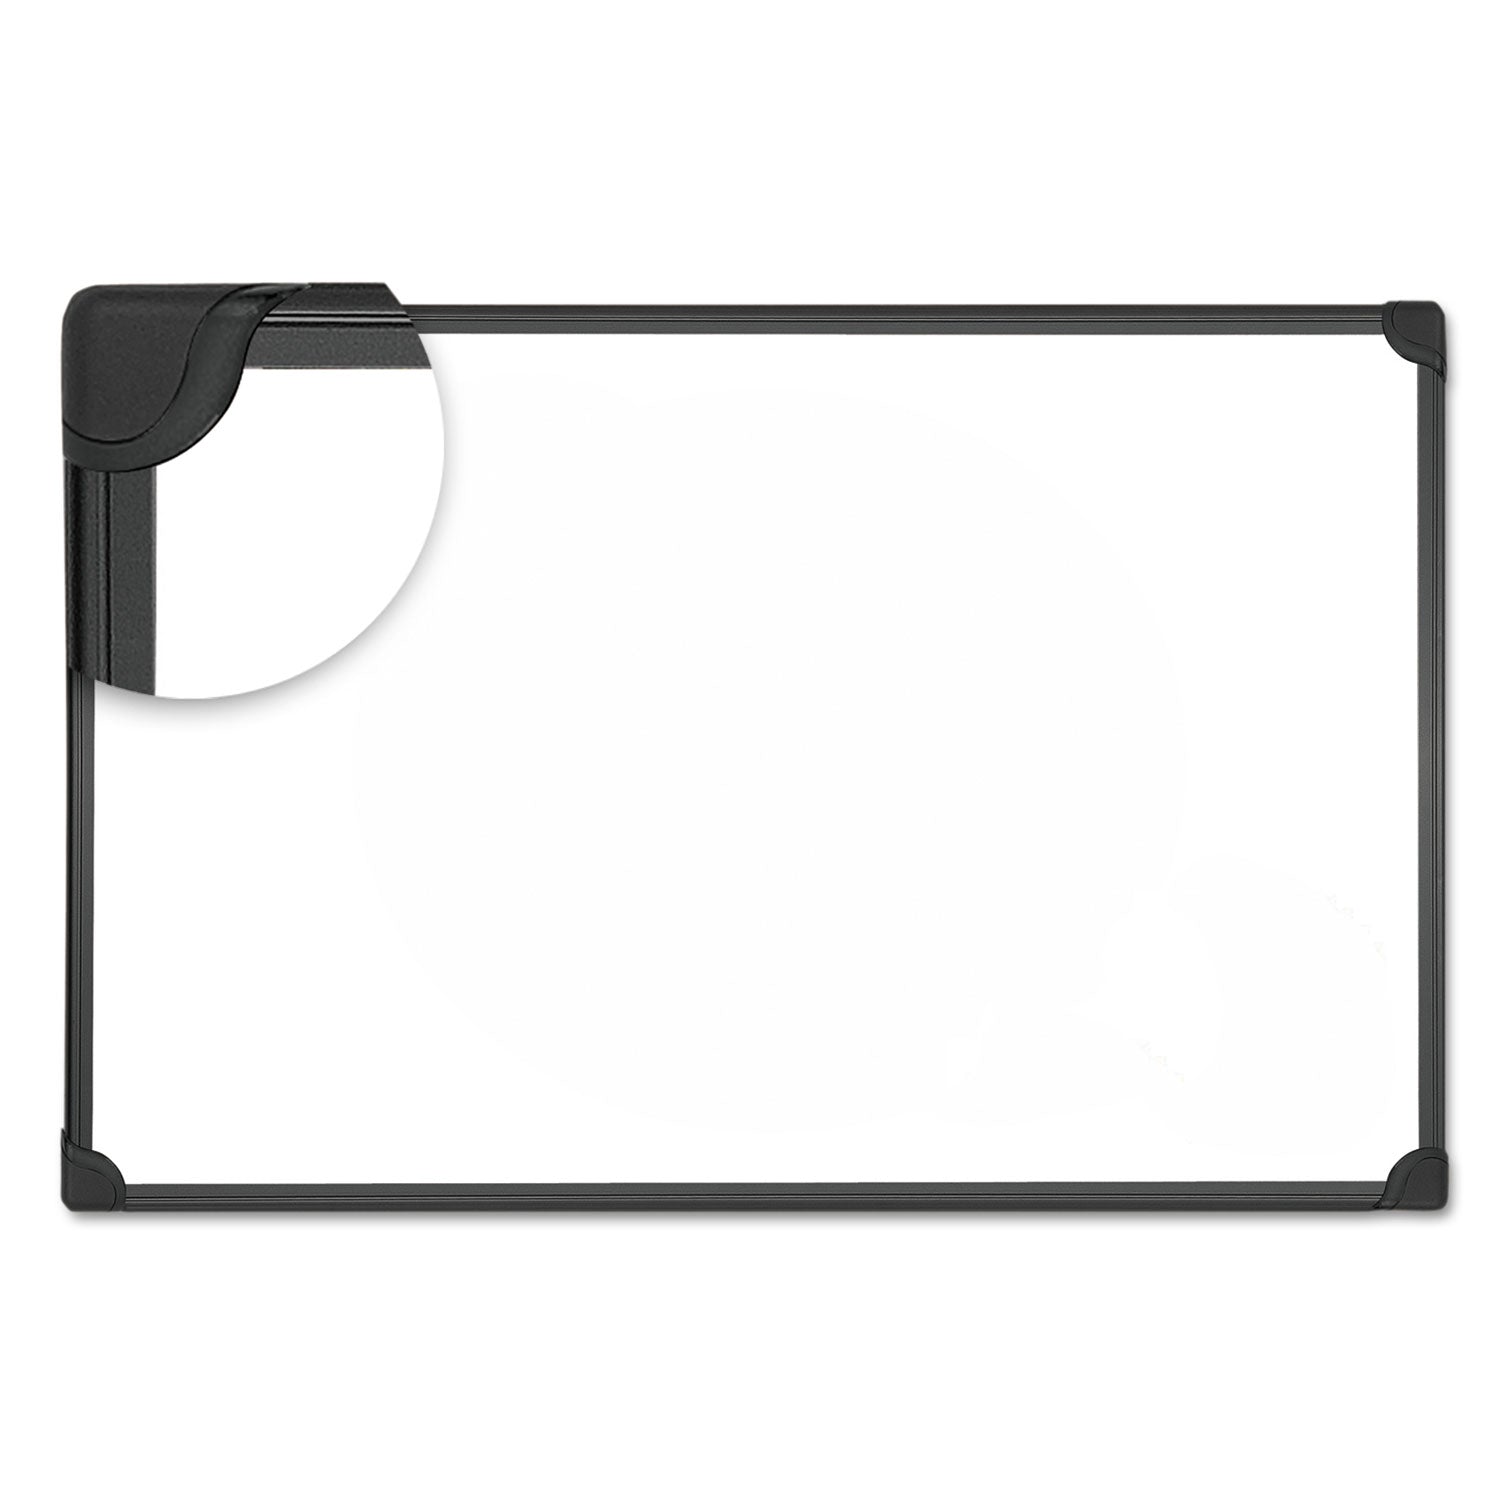 Design Series Deluxe Magnetic Steel Dry Erase Marker Board, 24 x 18, White Surface, Black Aluminum/Plastic Frame - 